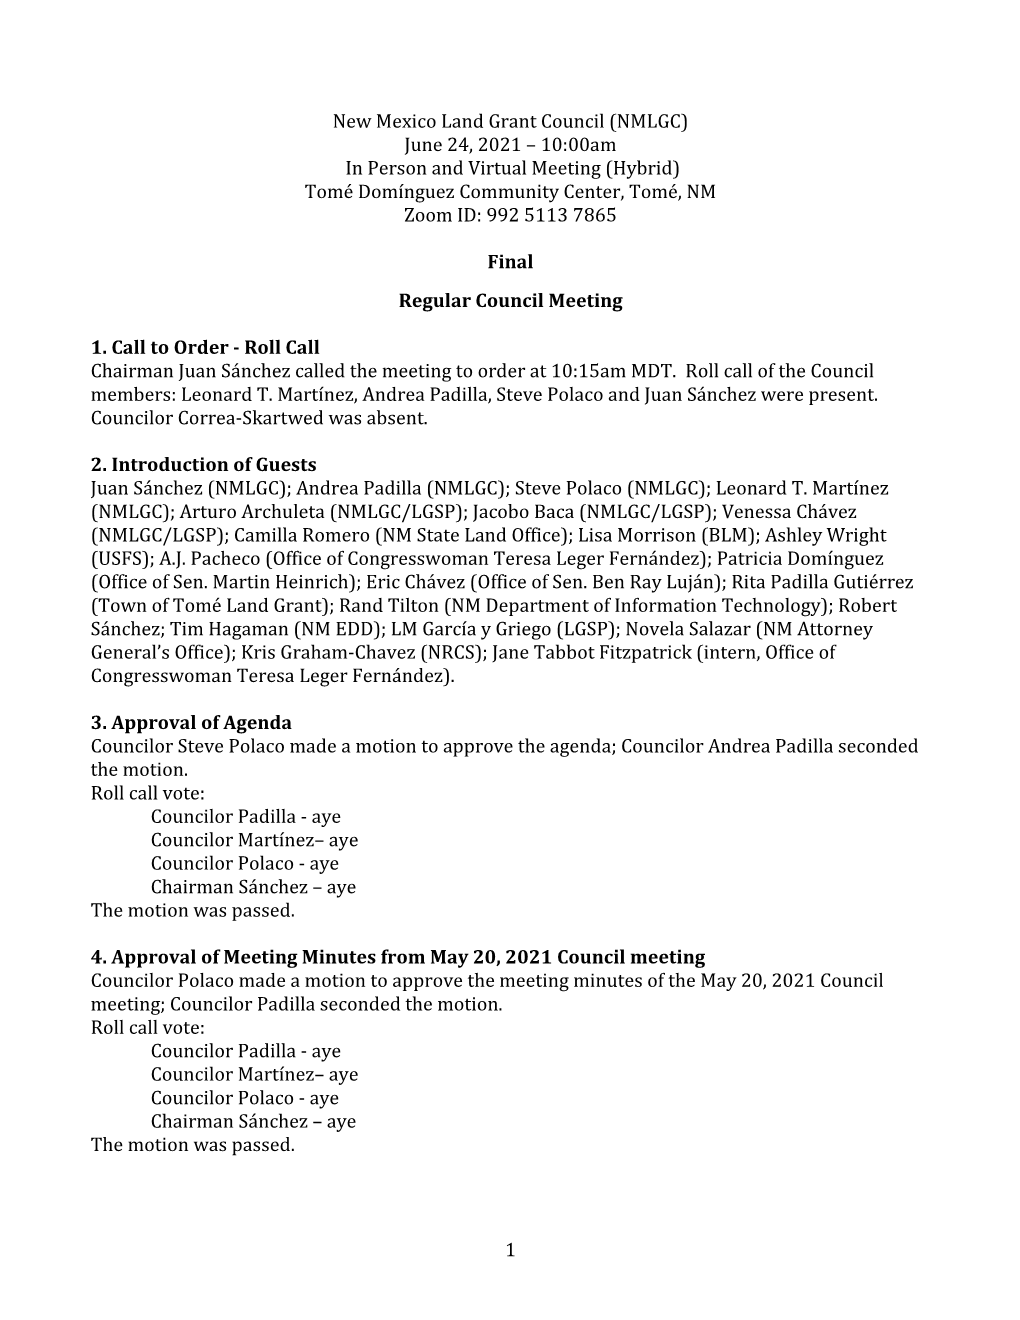 1 New Mexico Land Grant Council (NMLGC) June 24, 2021 – 10:00Am